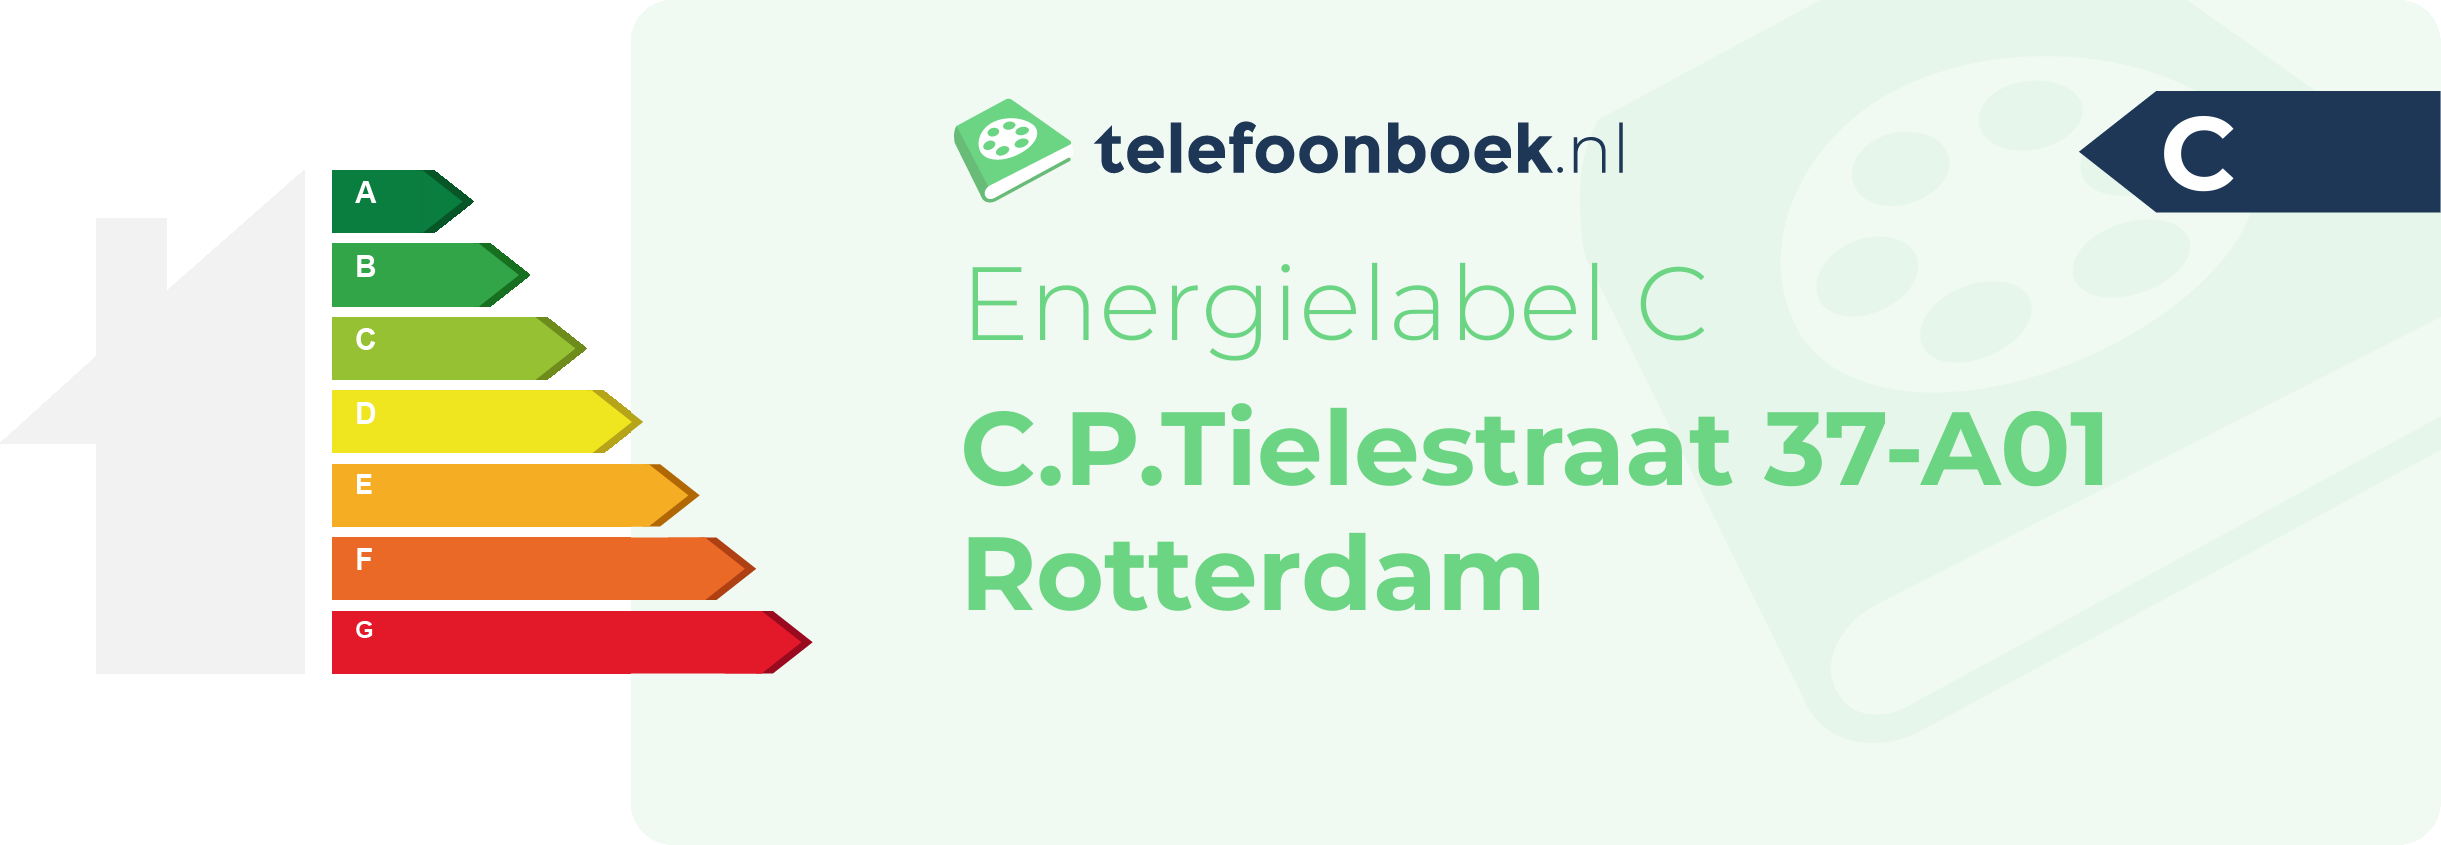 Energielabel C.P.Tielestraat 37-A01 Rotterdam